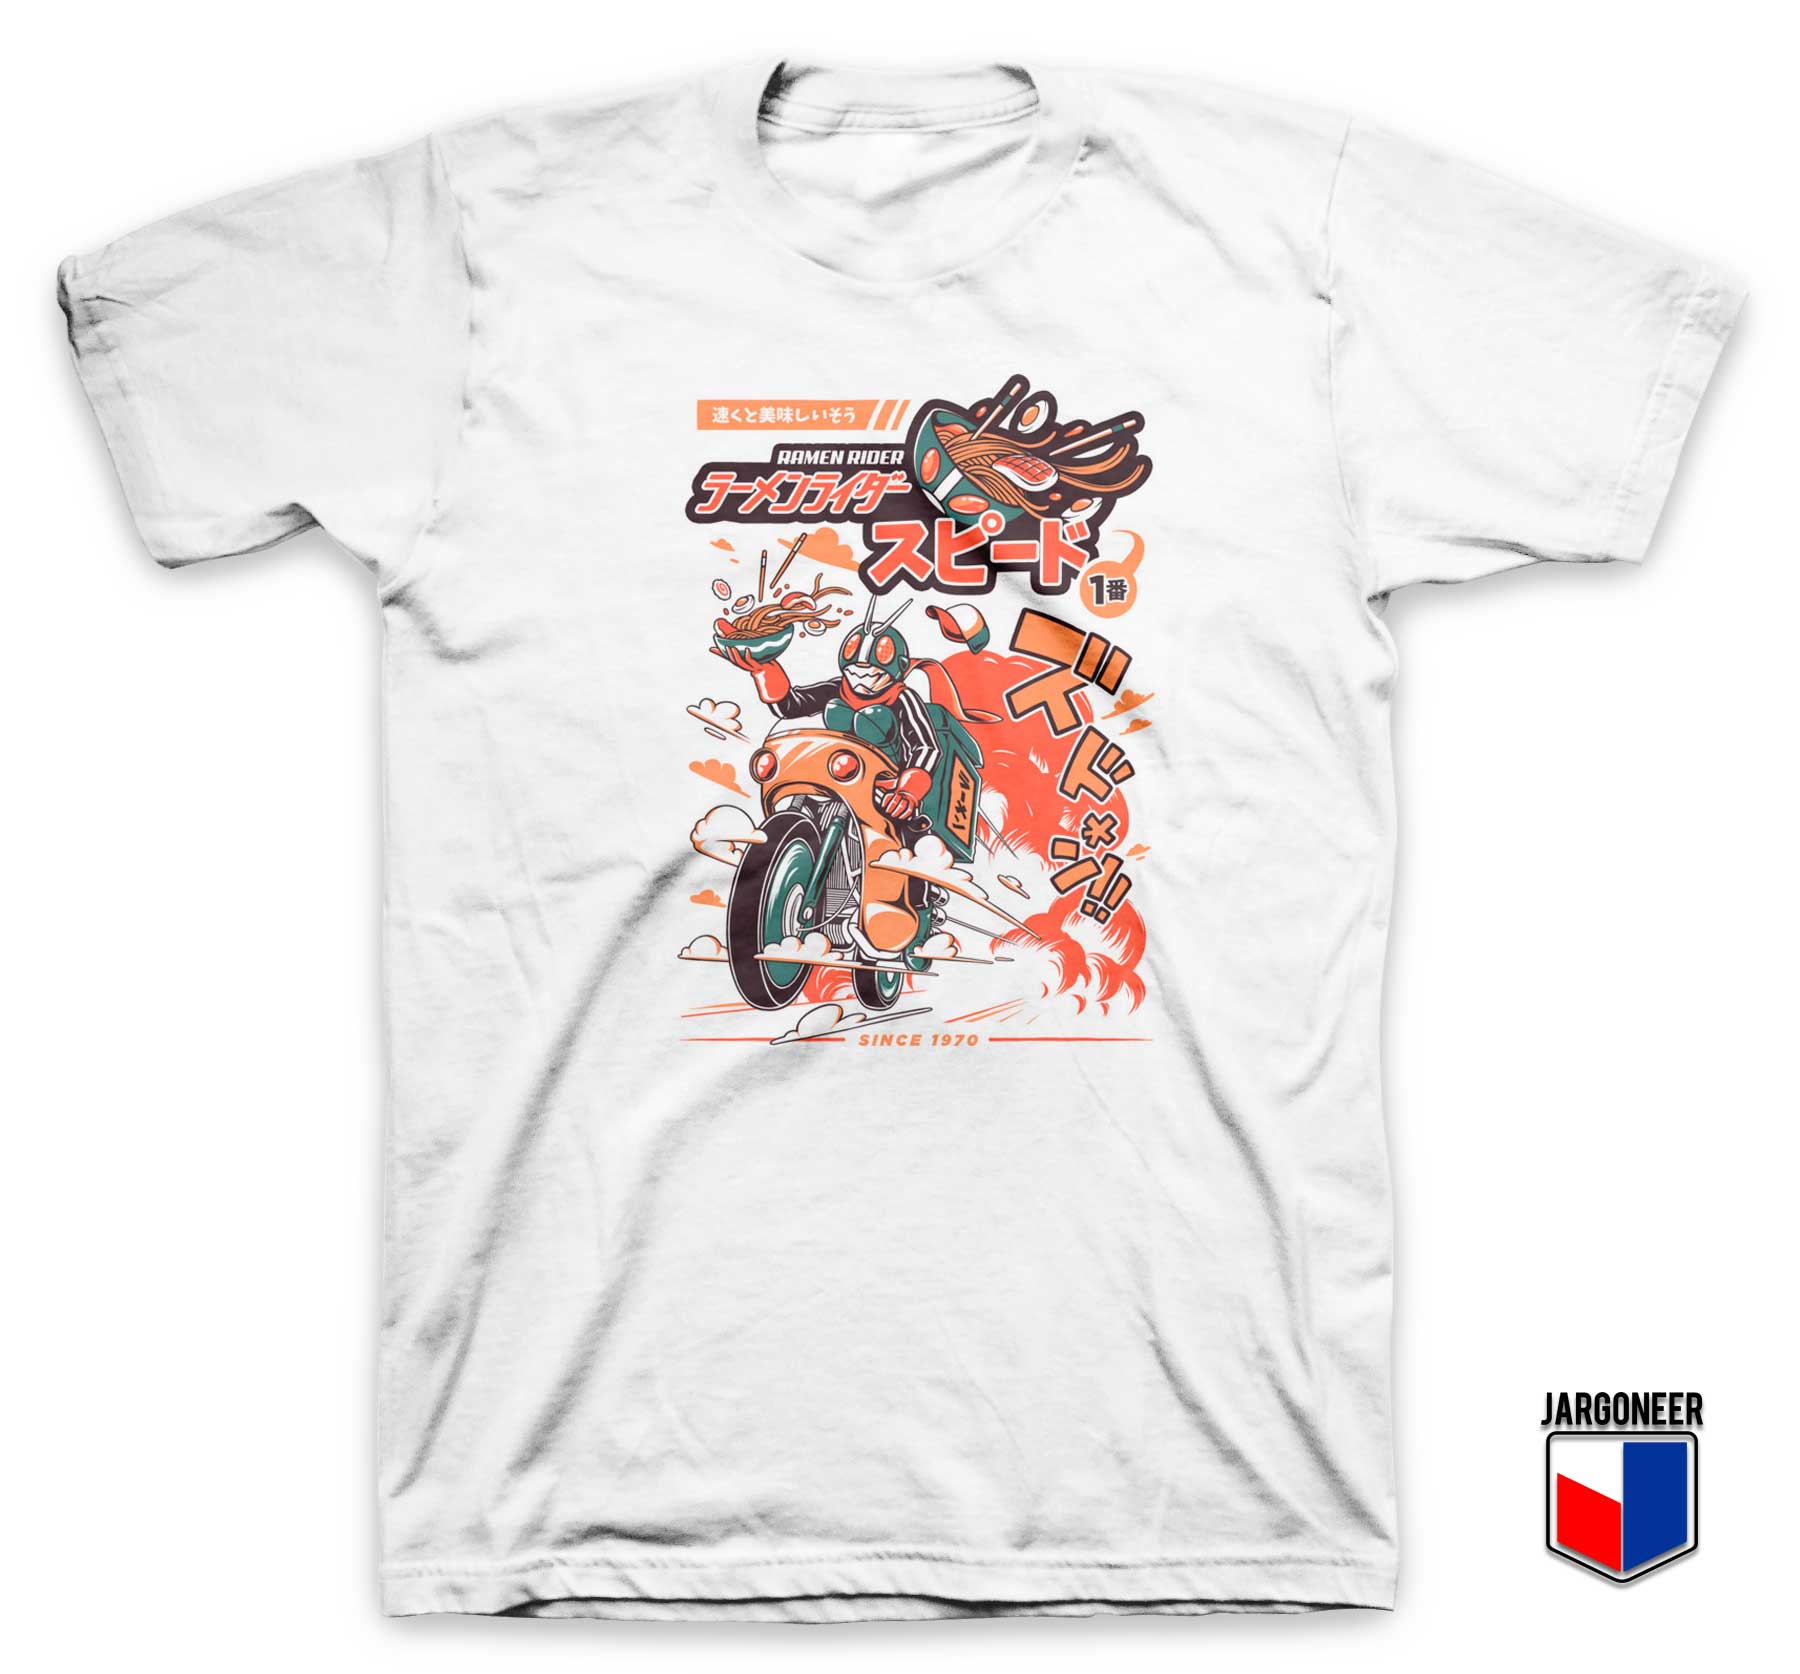 Ramen Raider - Shop Unique Graphic Cool Shirt Designs